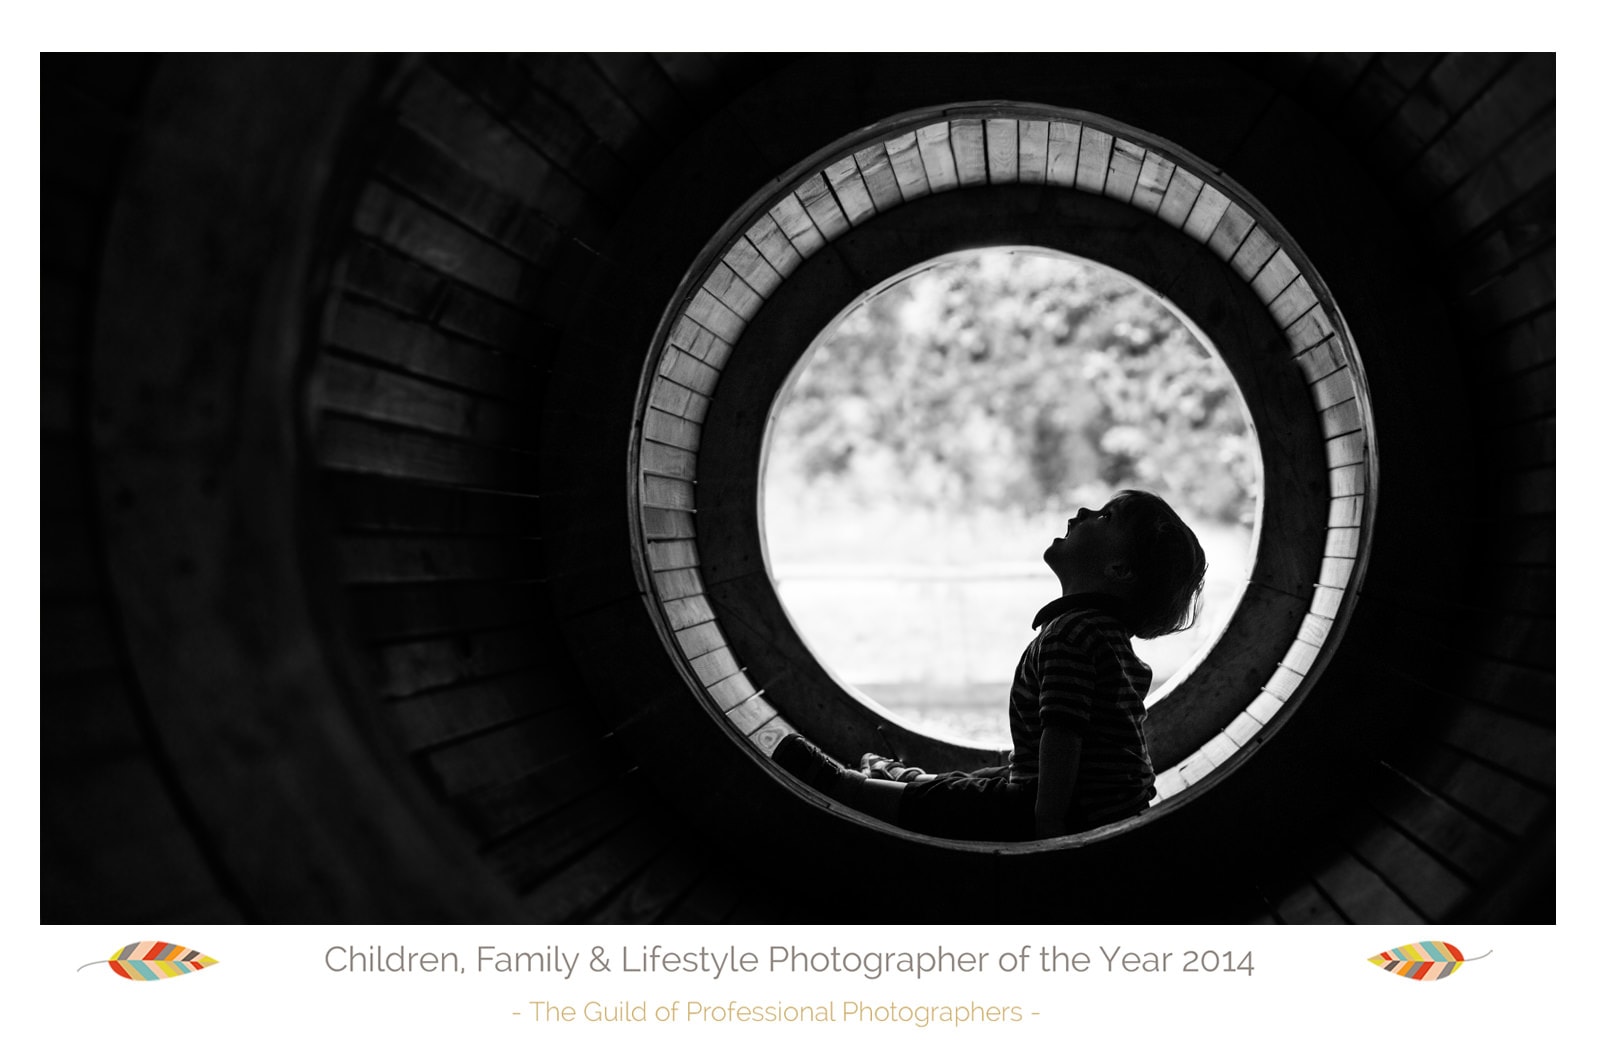 Award winning images Guild of Professional Photographers 